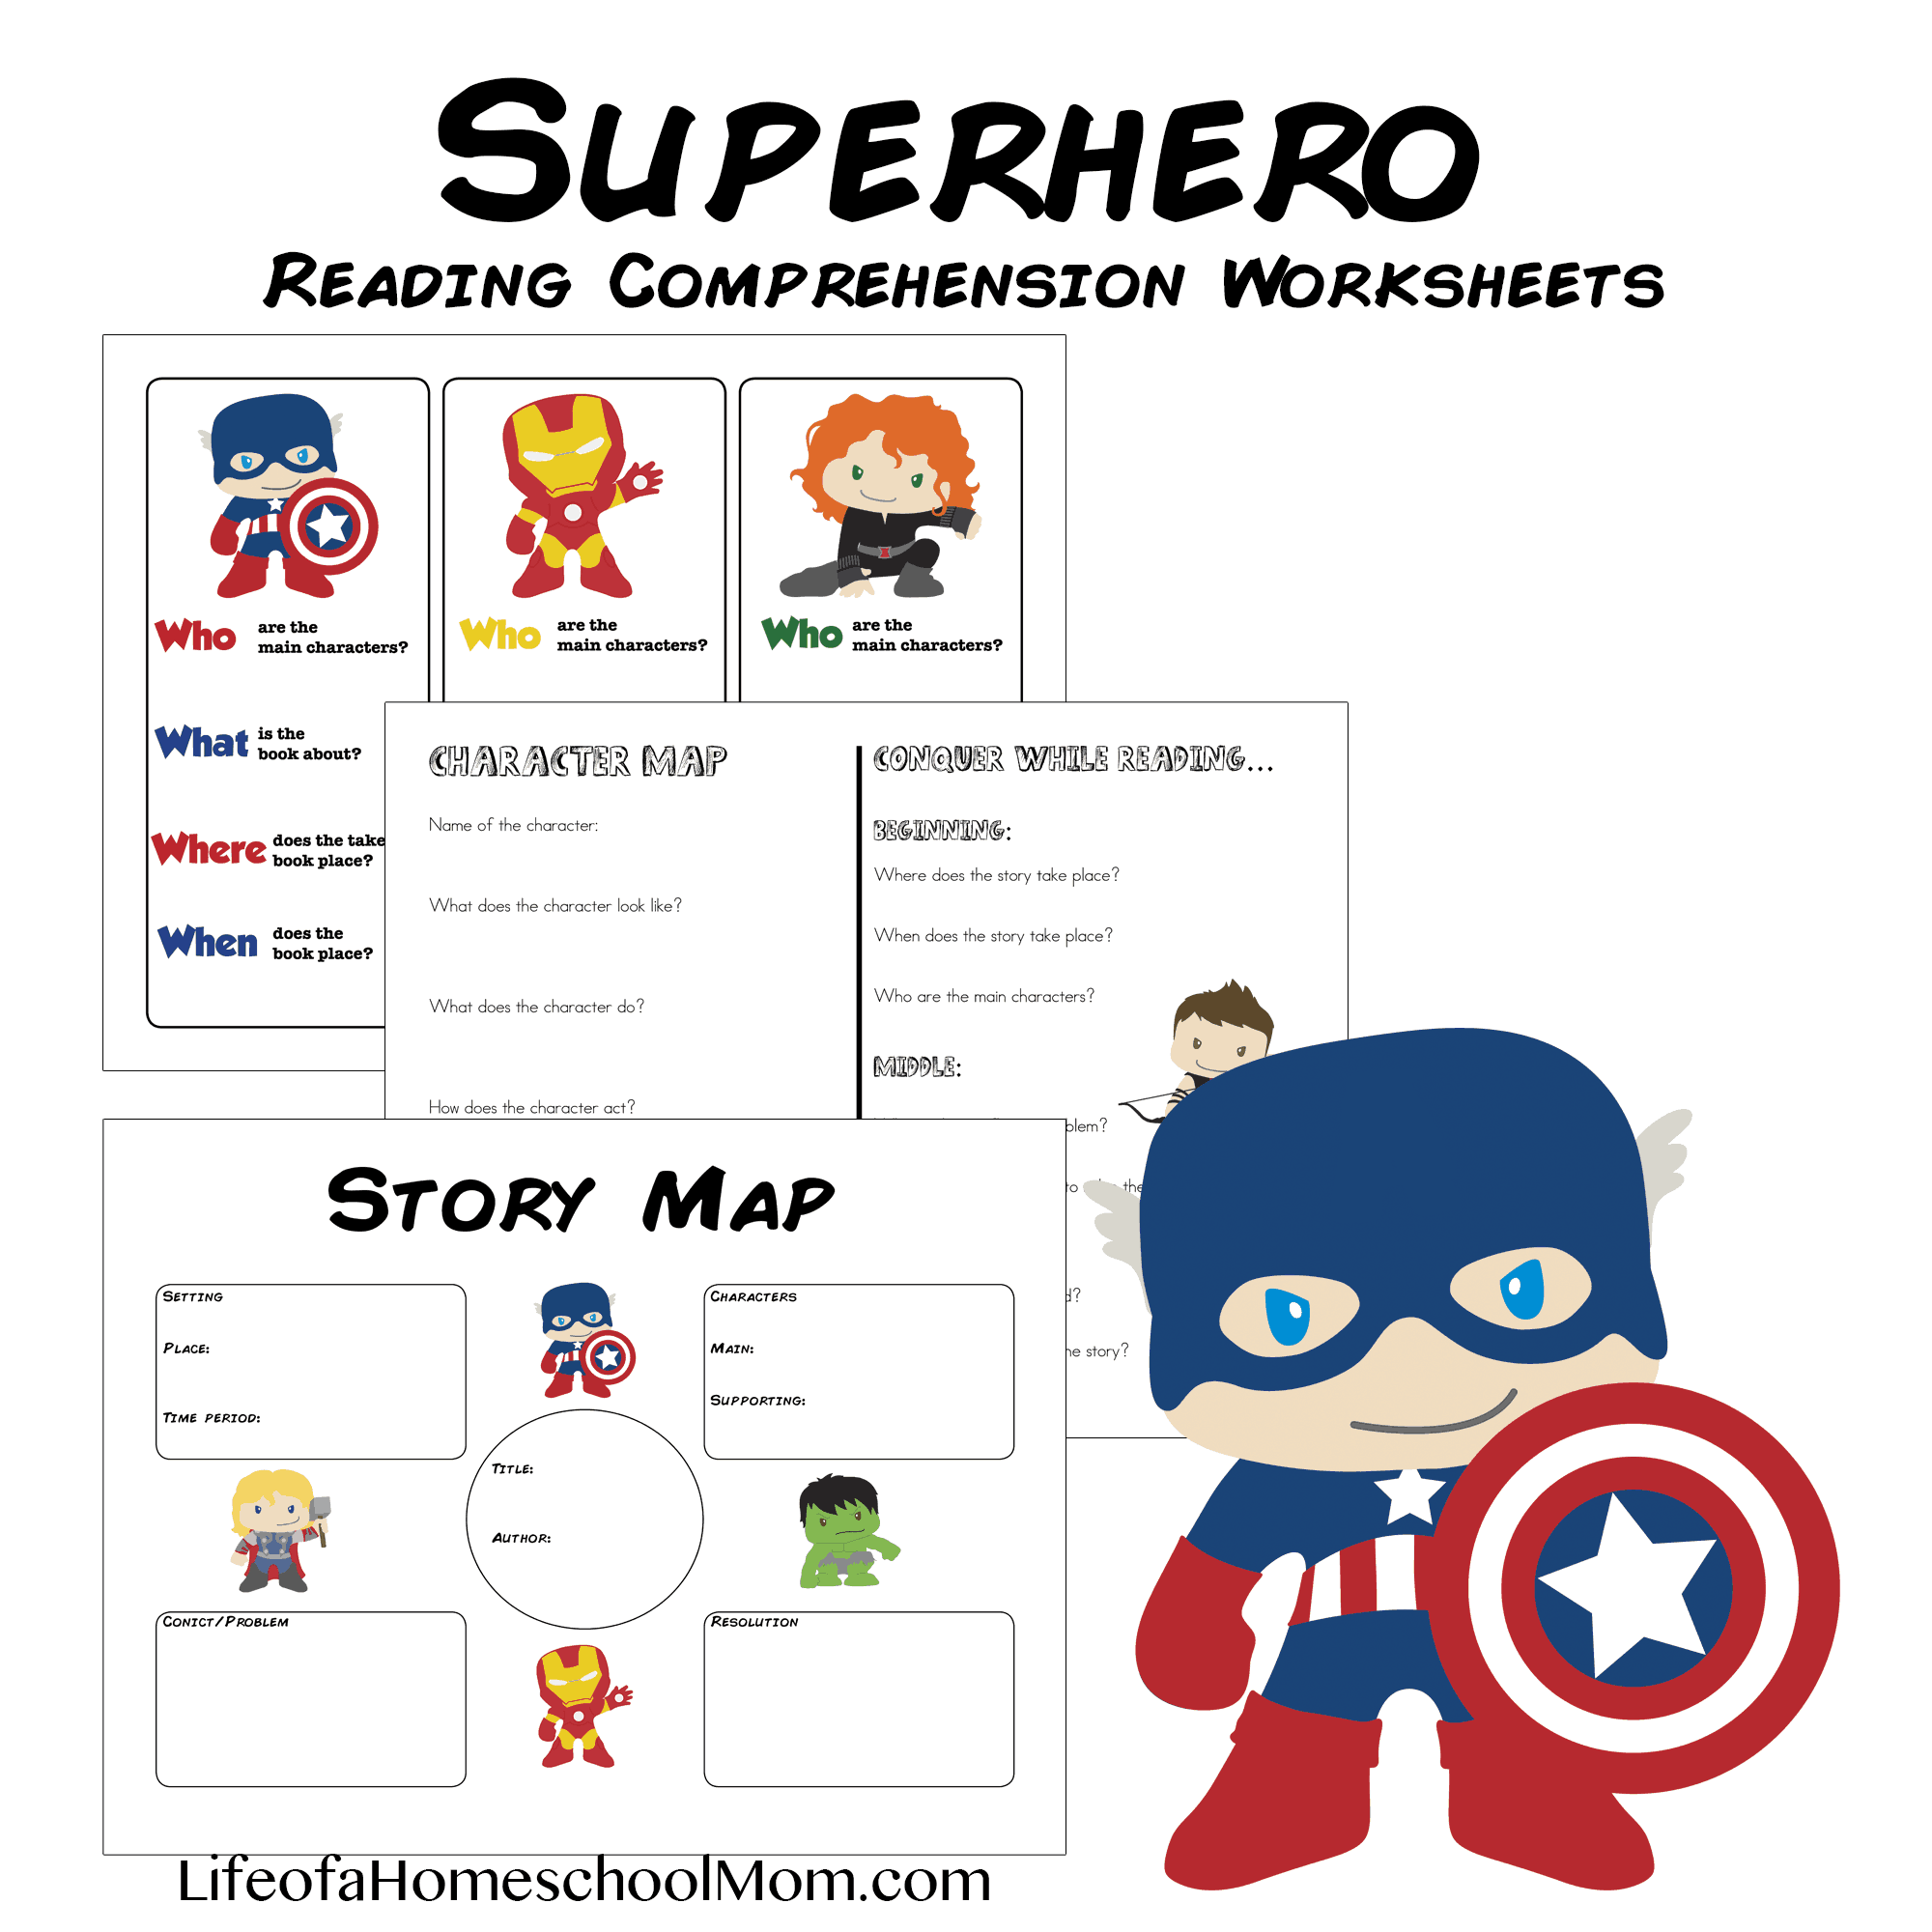 Superhero Reading Comprehension Worksheets